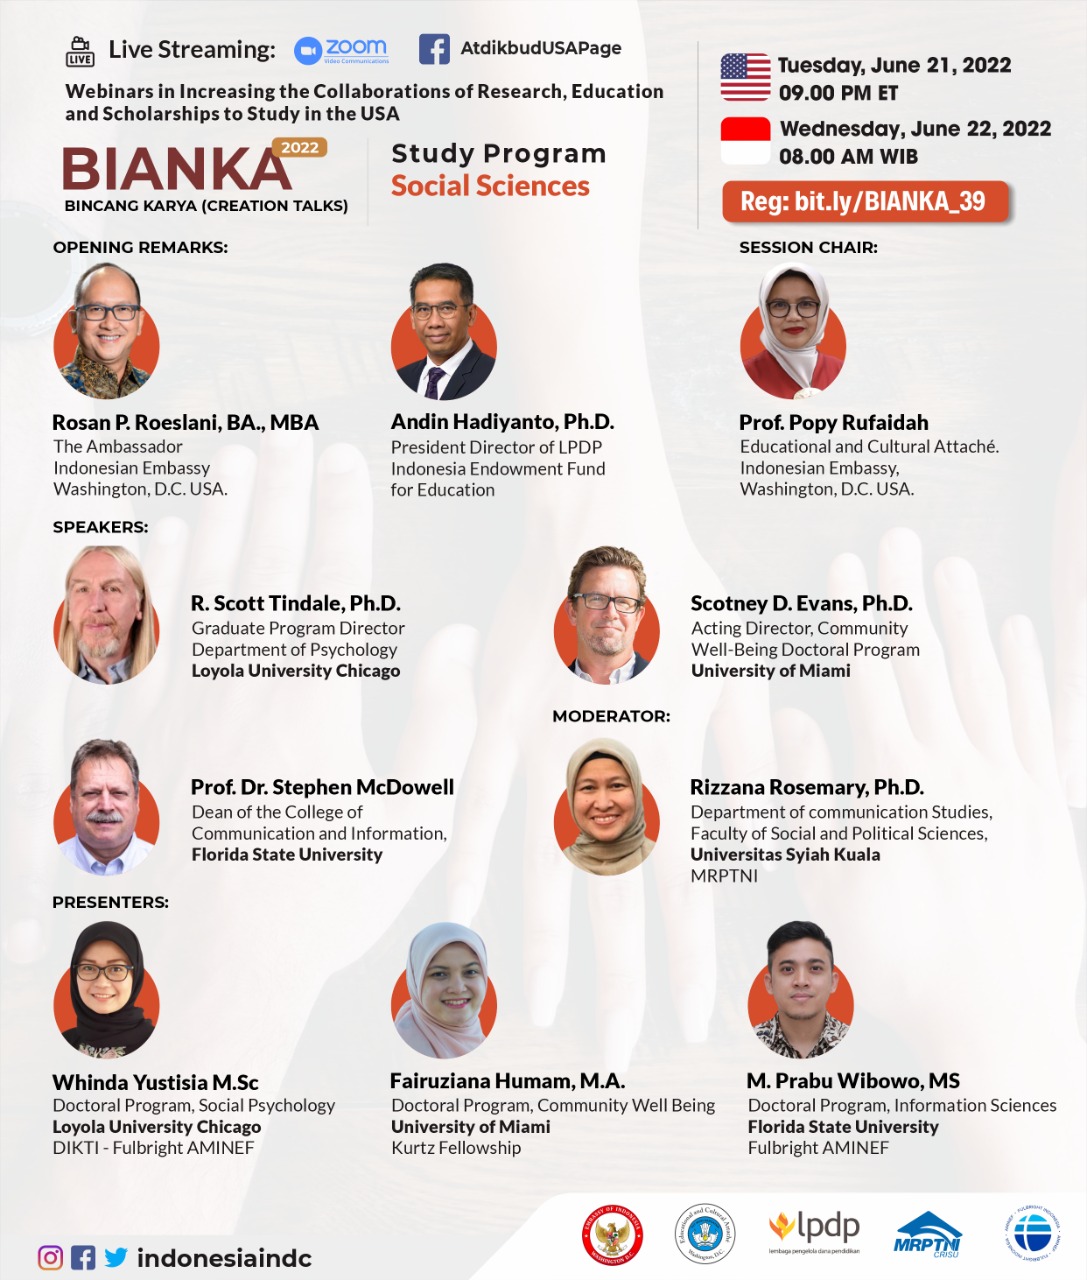 List of BIANKA presenters